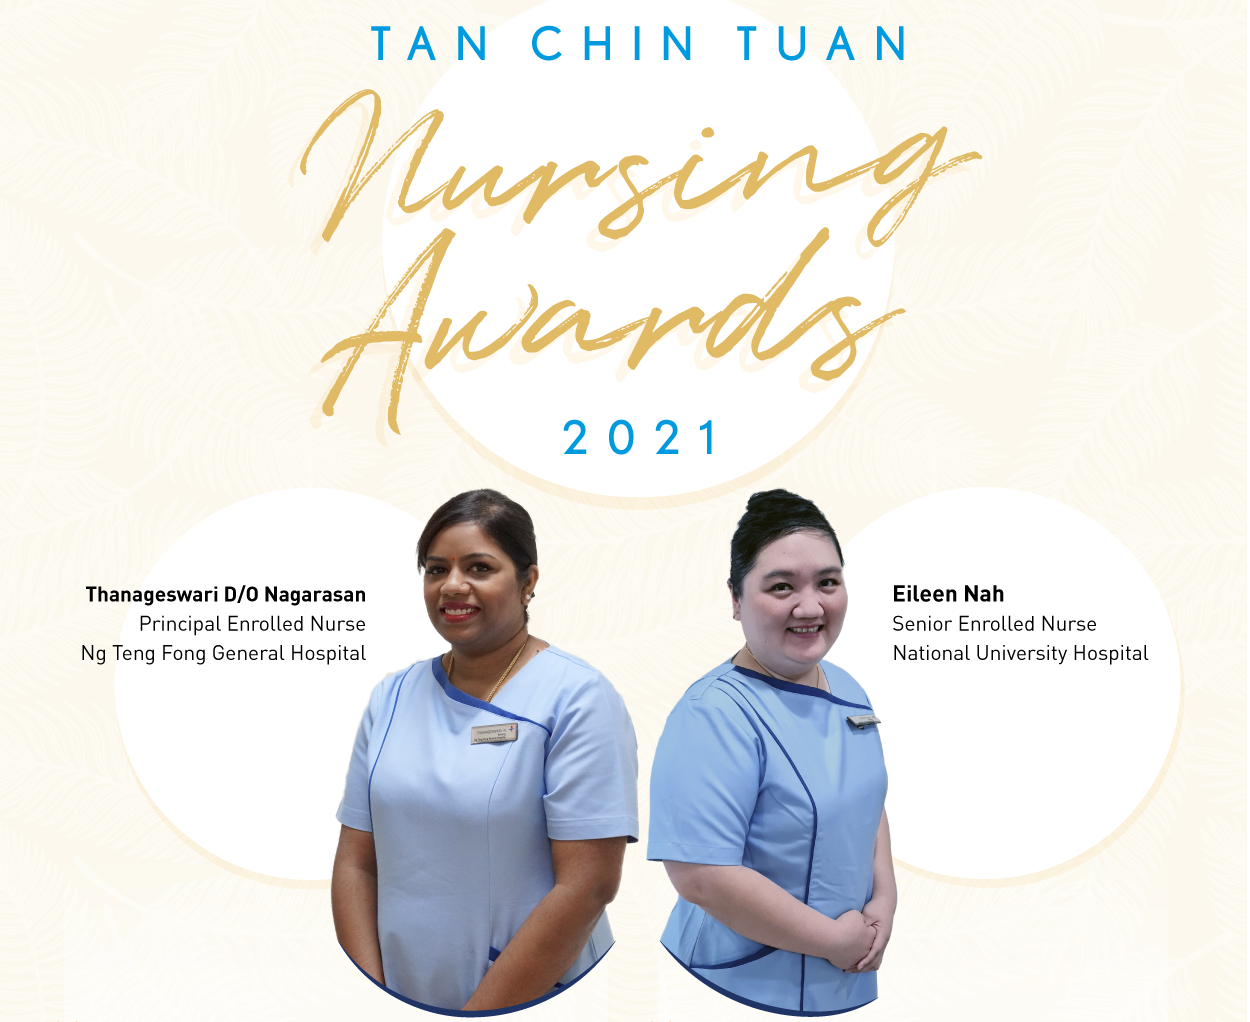 Tan Chin Tuan Nursing Award 2021